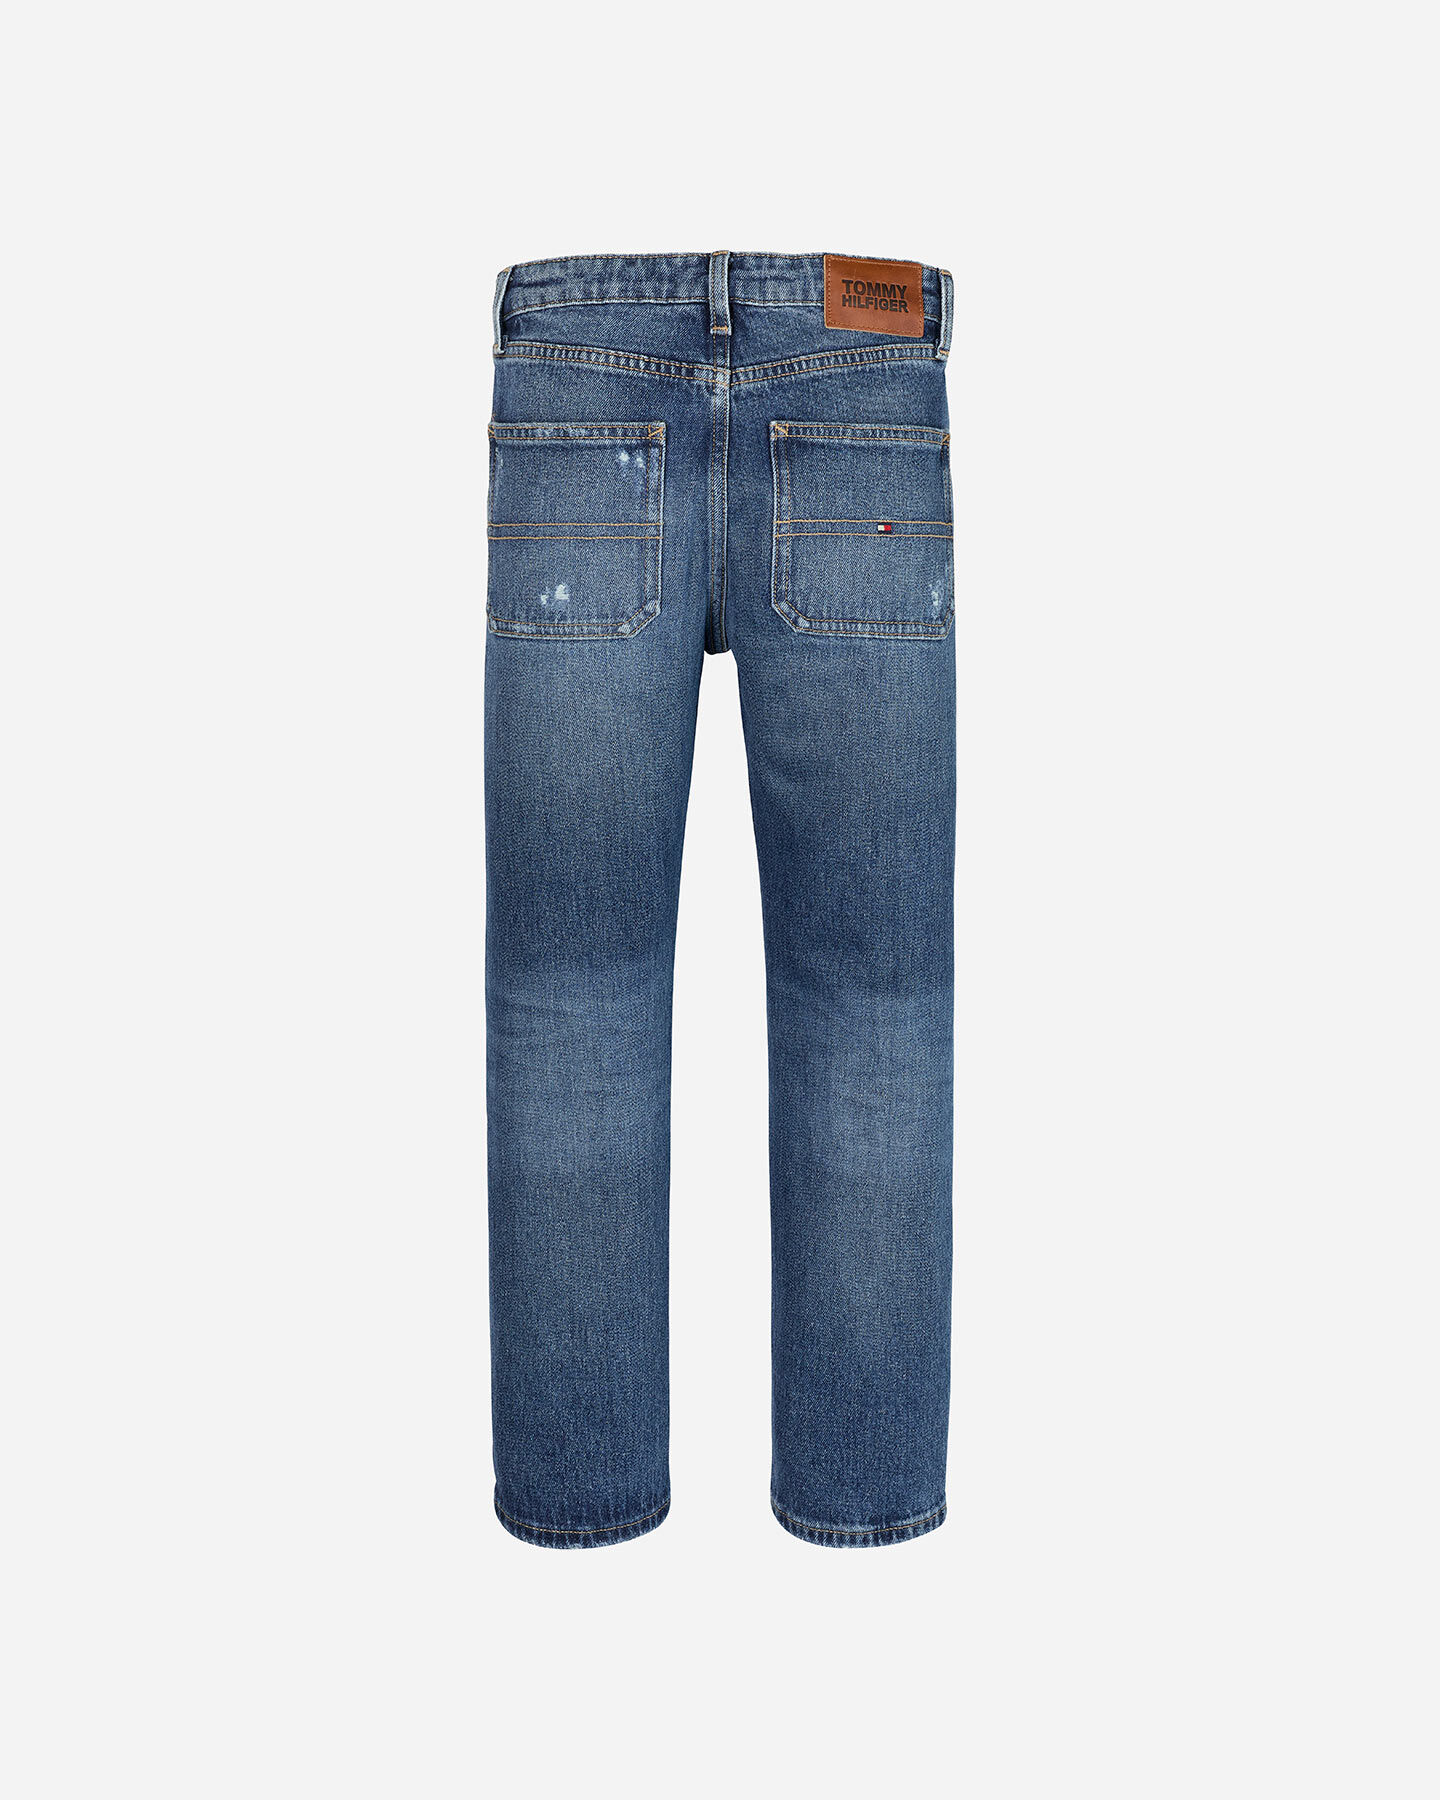  Jeans TOMMY HILFIGER SKATER ROTTUREID JR S4126707|1A5|14A scatto 1